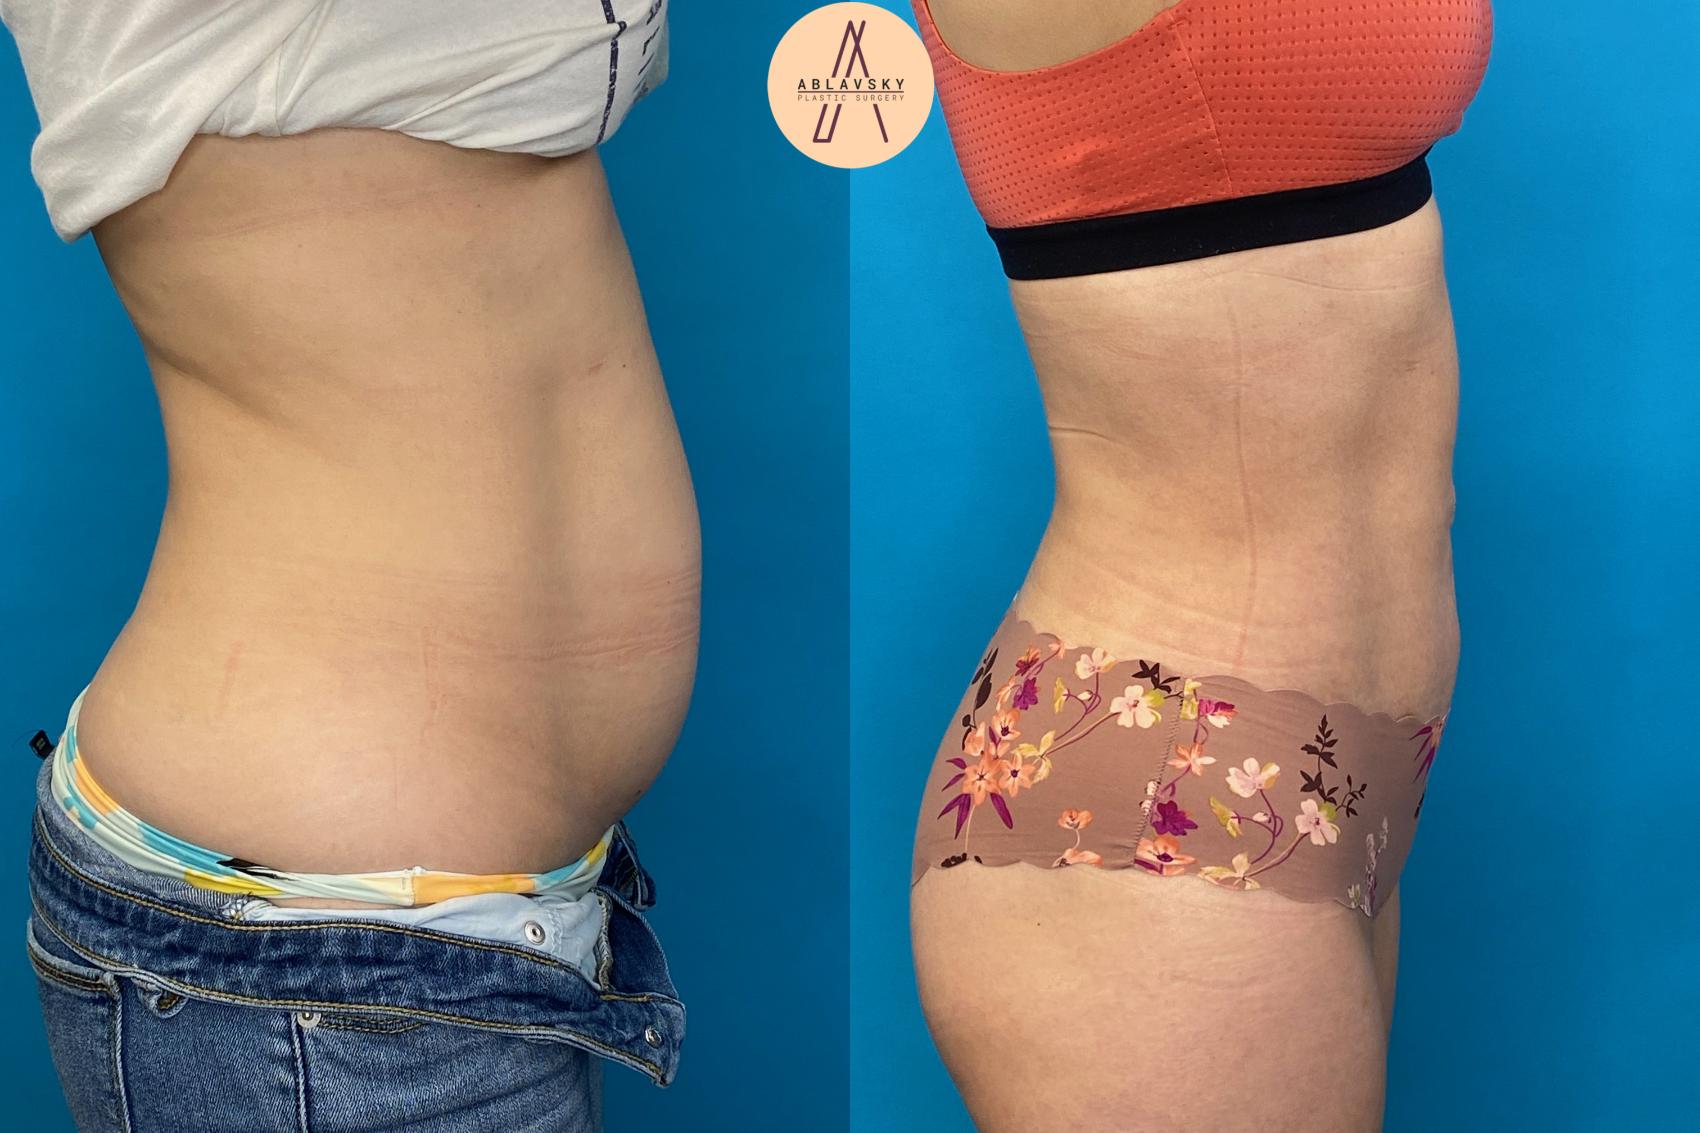 https://images.ablavskyplasticsurgery.com/content/images/liposuction-21-right-side-detail.jpg